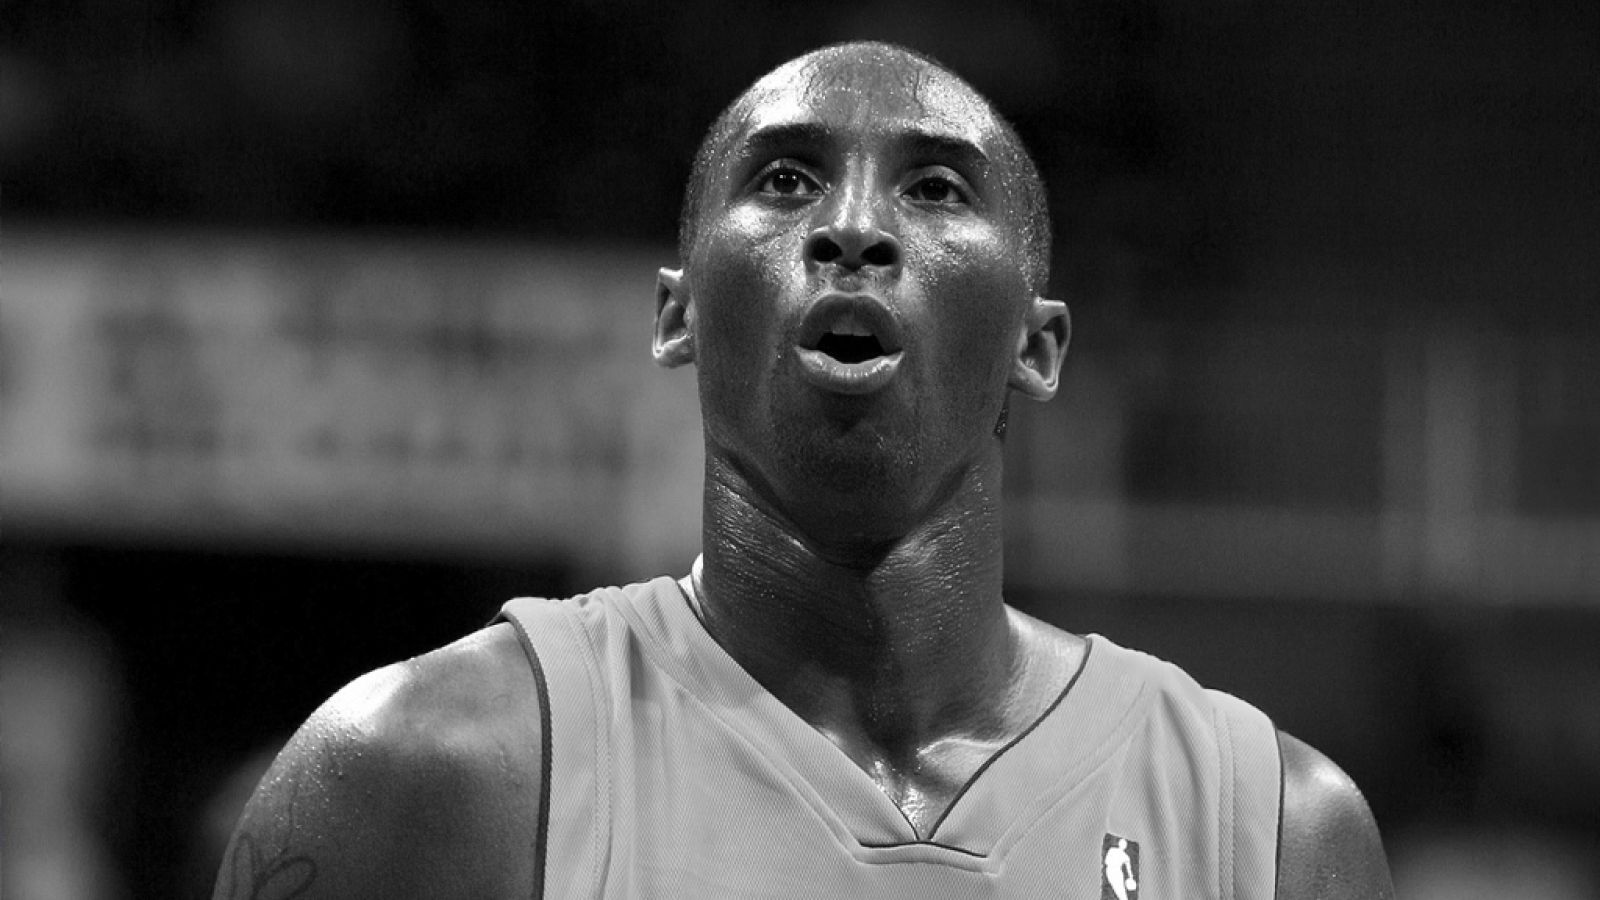 Tablero deportivo - Jorge Garbajosa: "Kobe Bryant ha trascendido al baloncesto" - Escuchar ahora